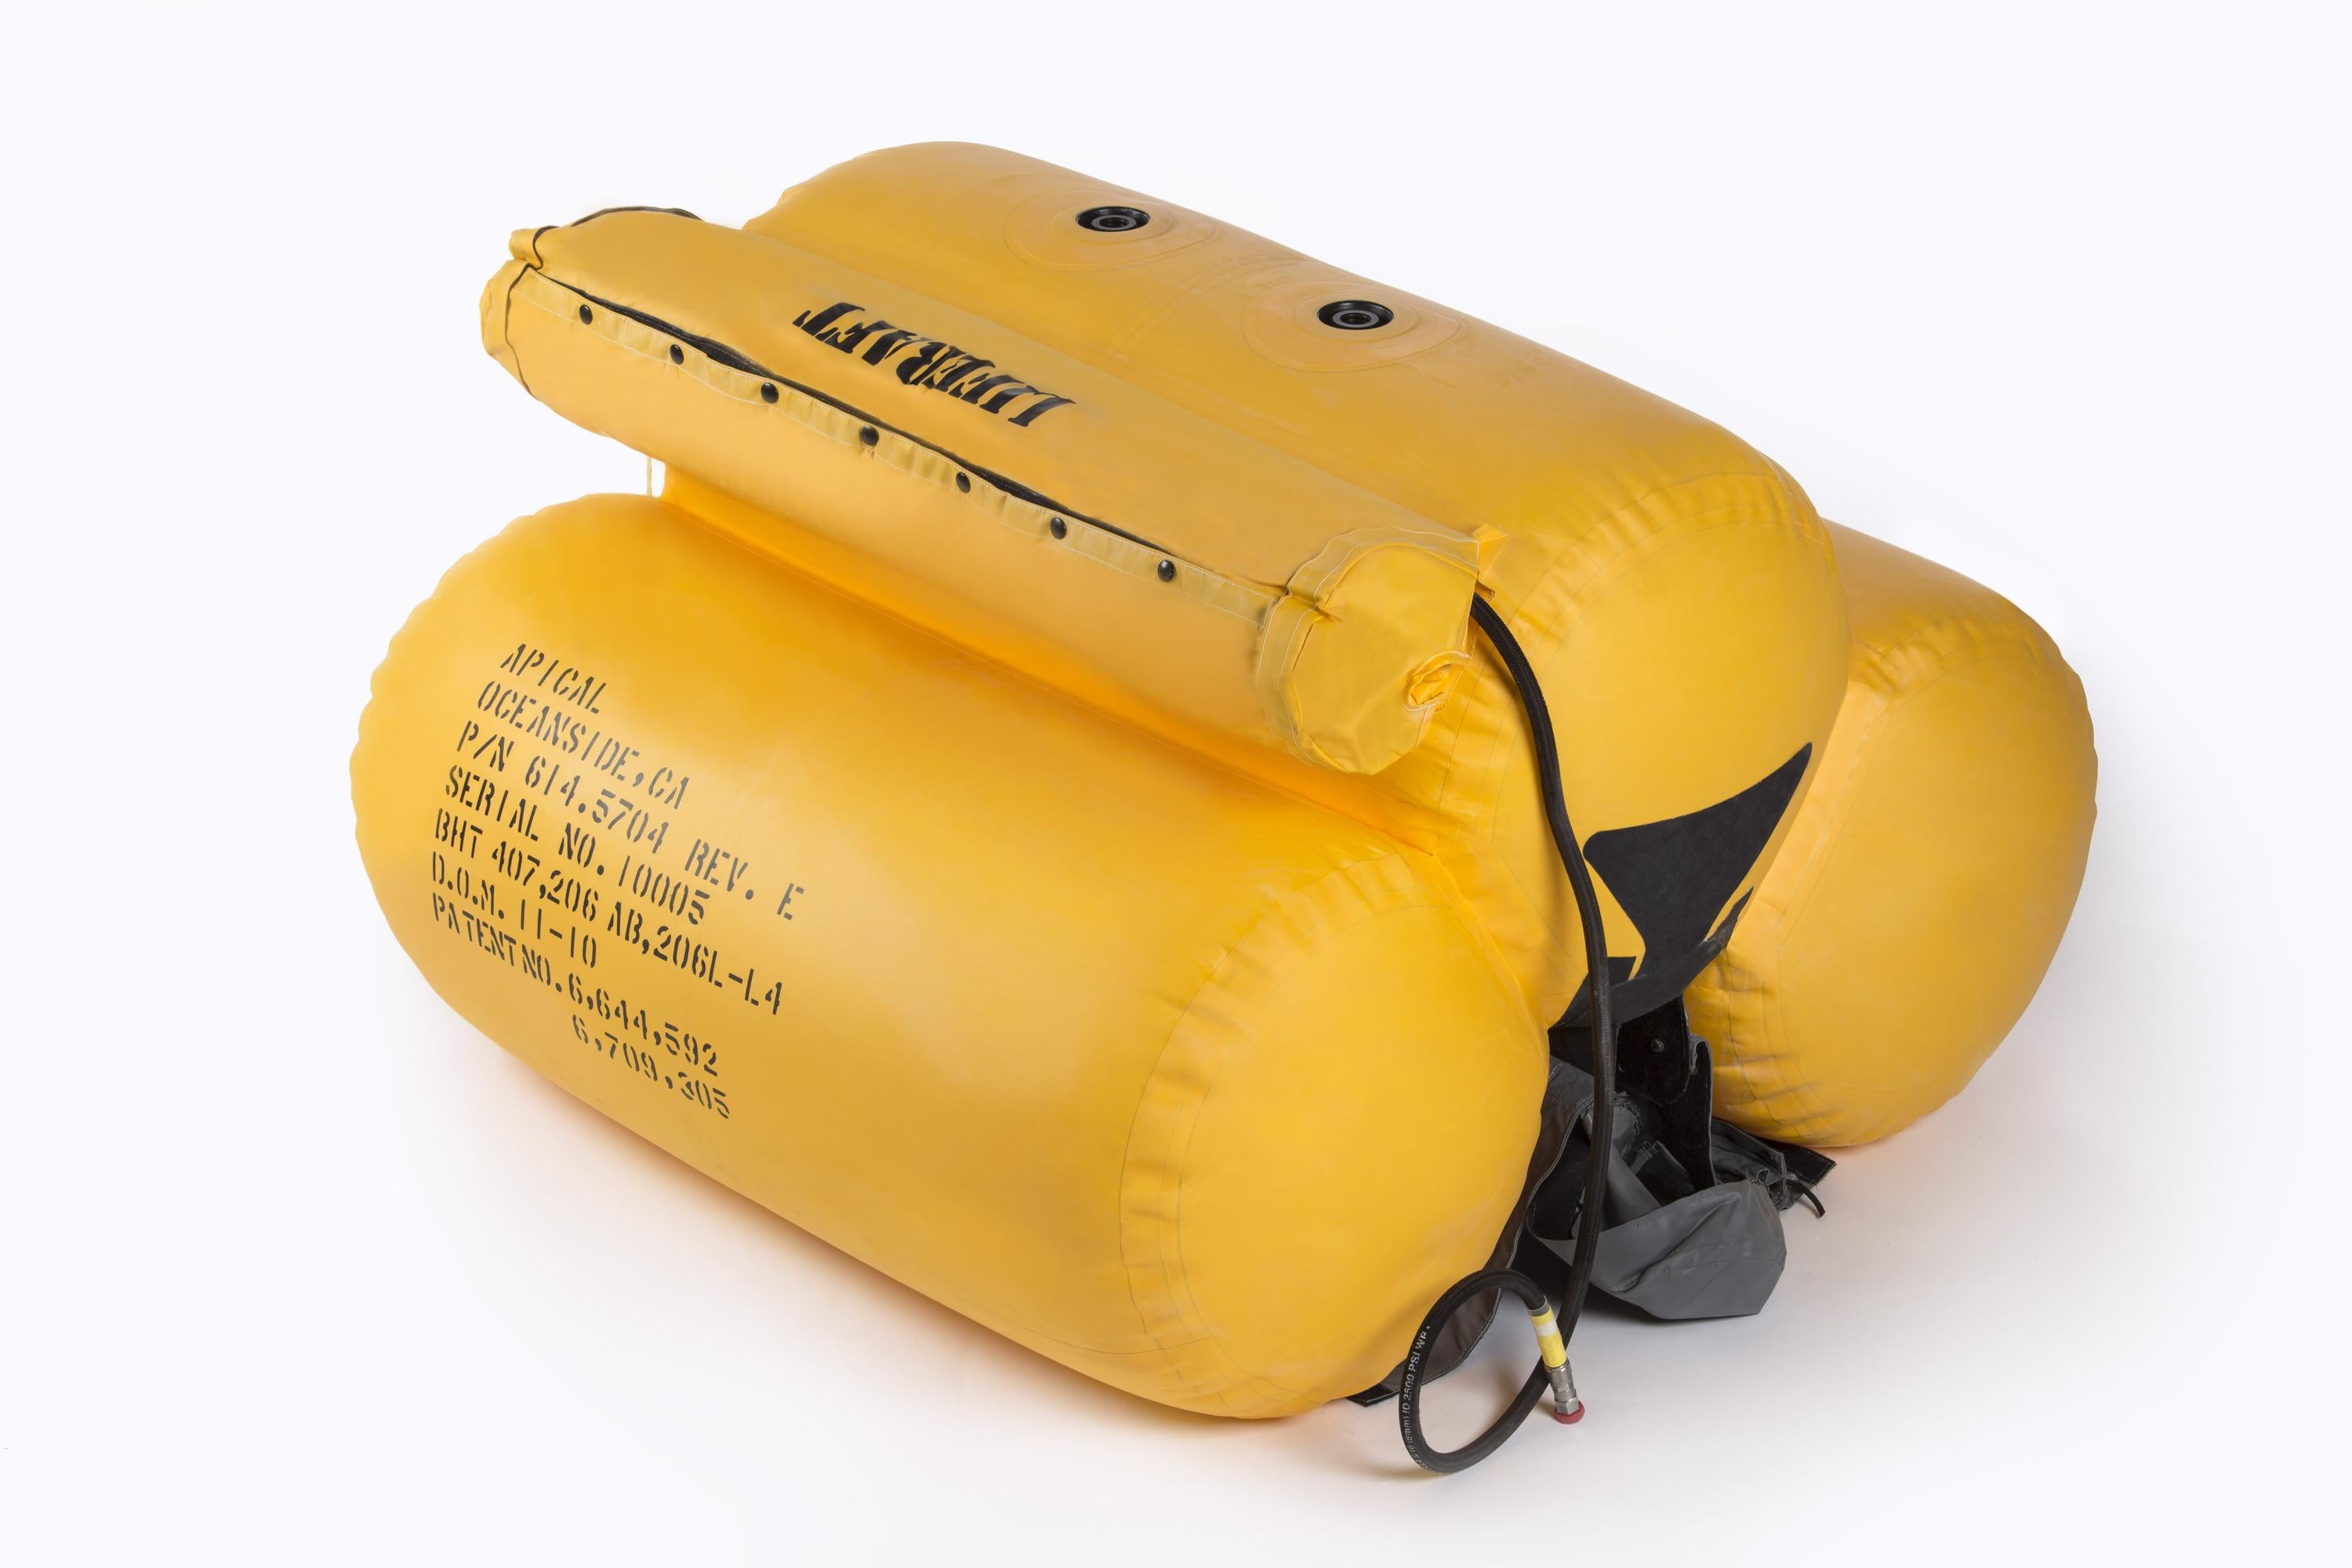 407 tri-bag float system with liferaft